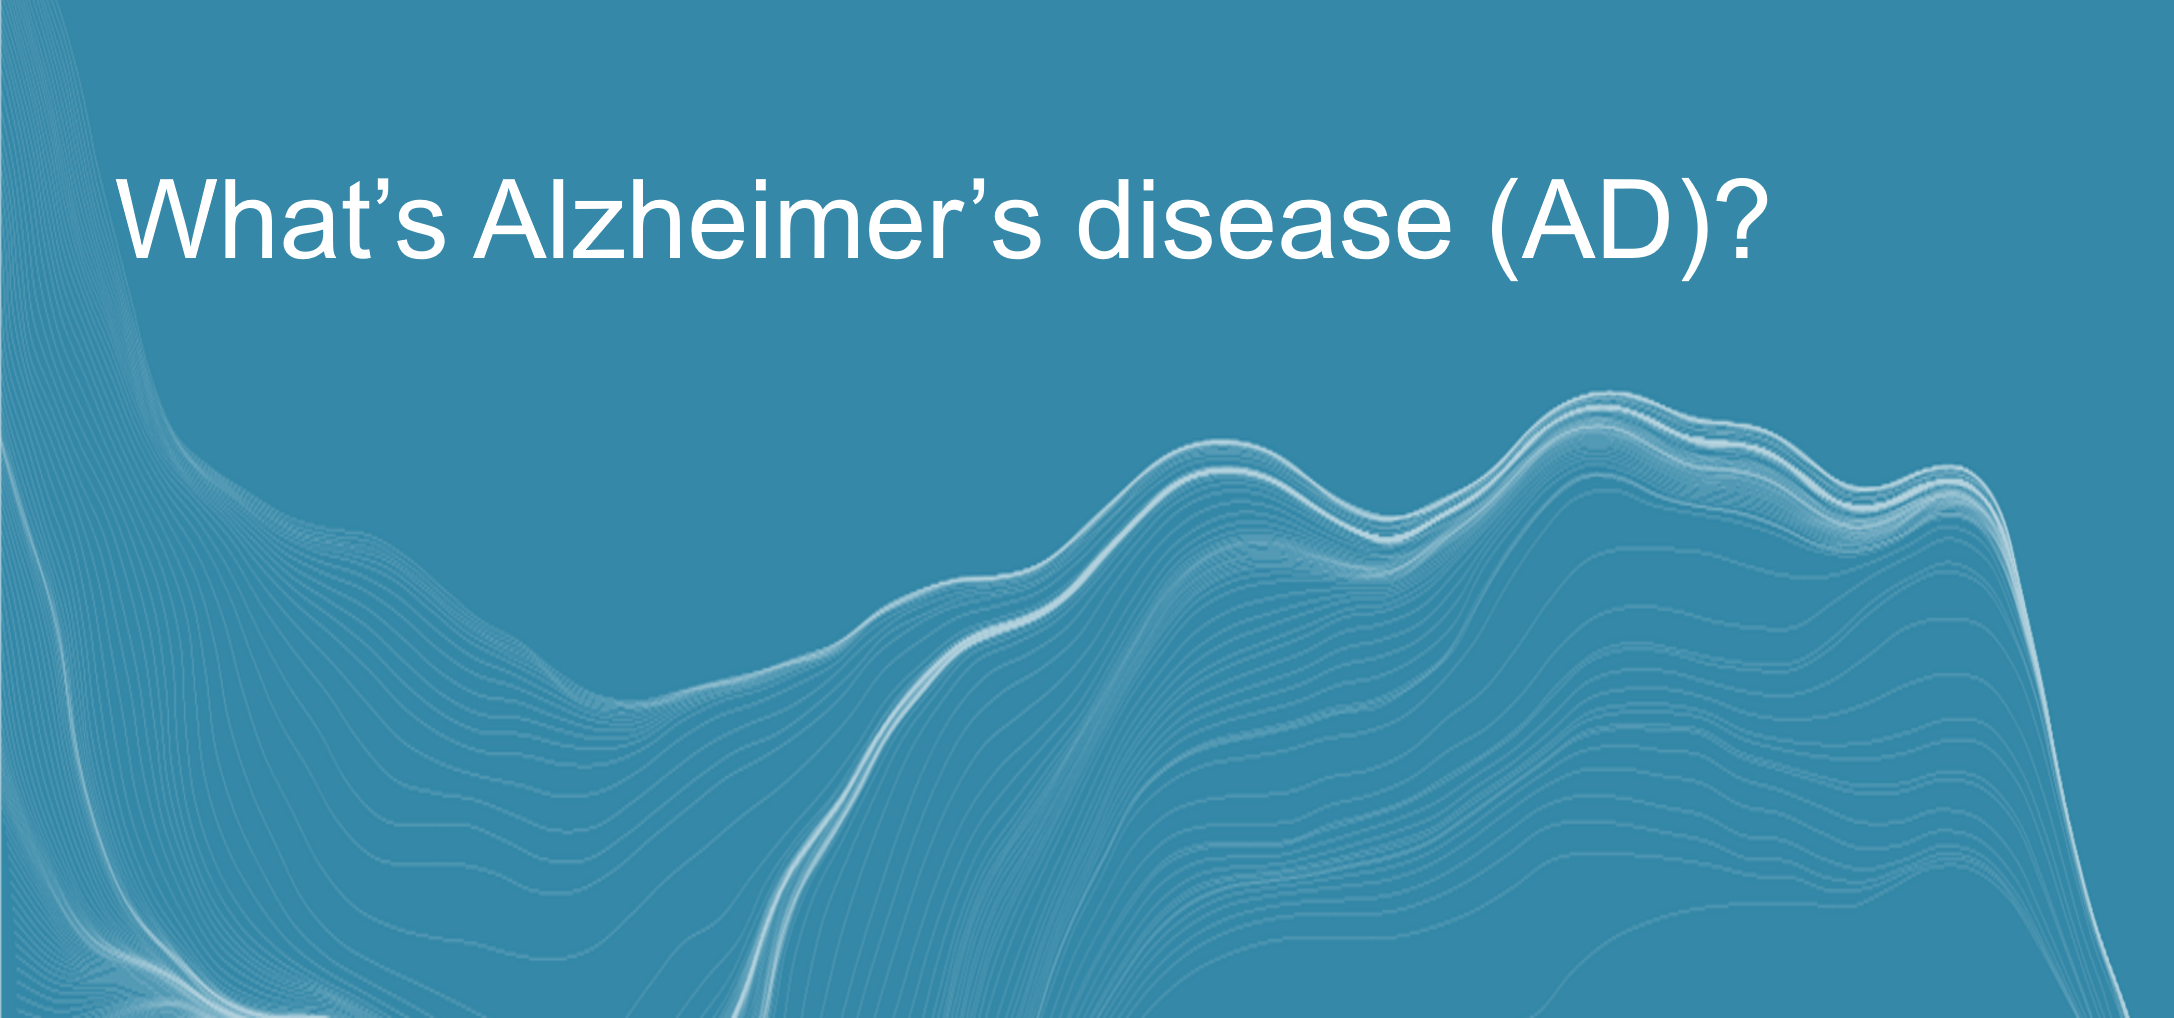 What's Alzheimer's disease